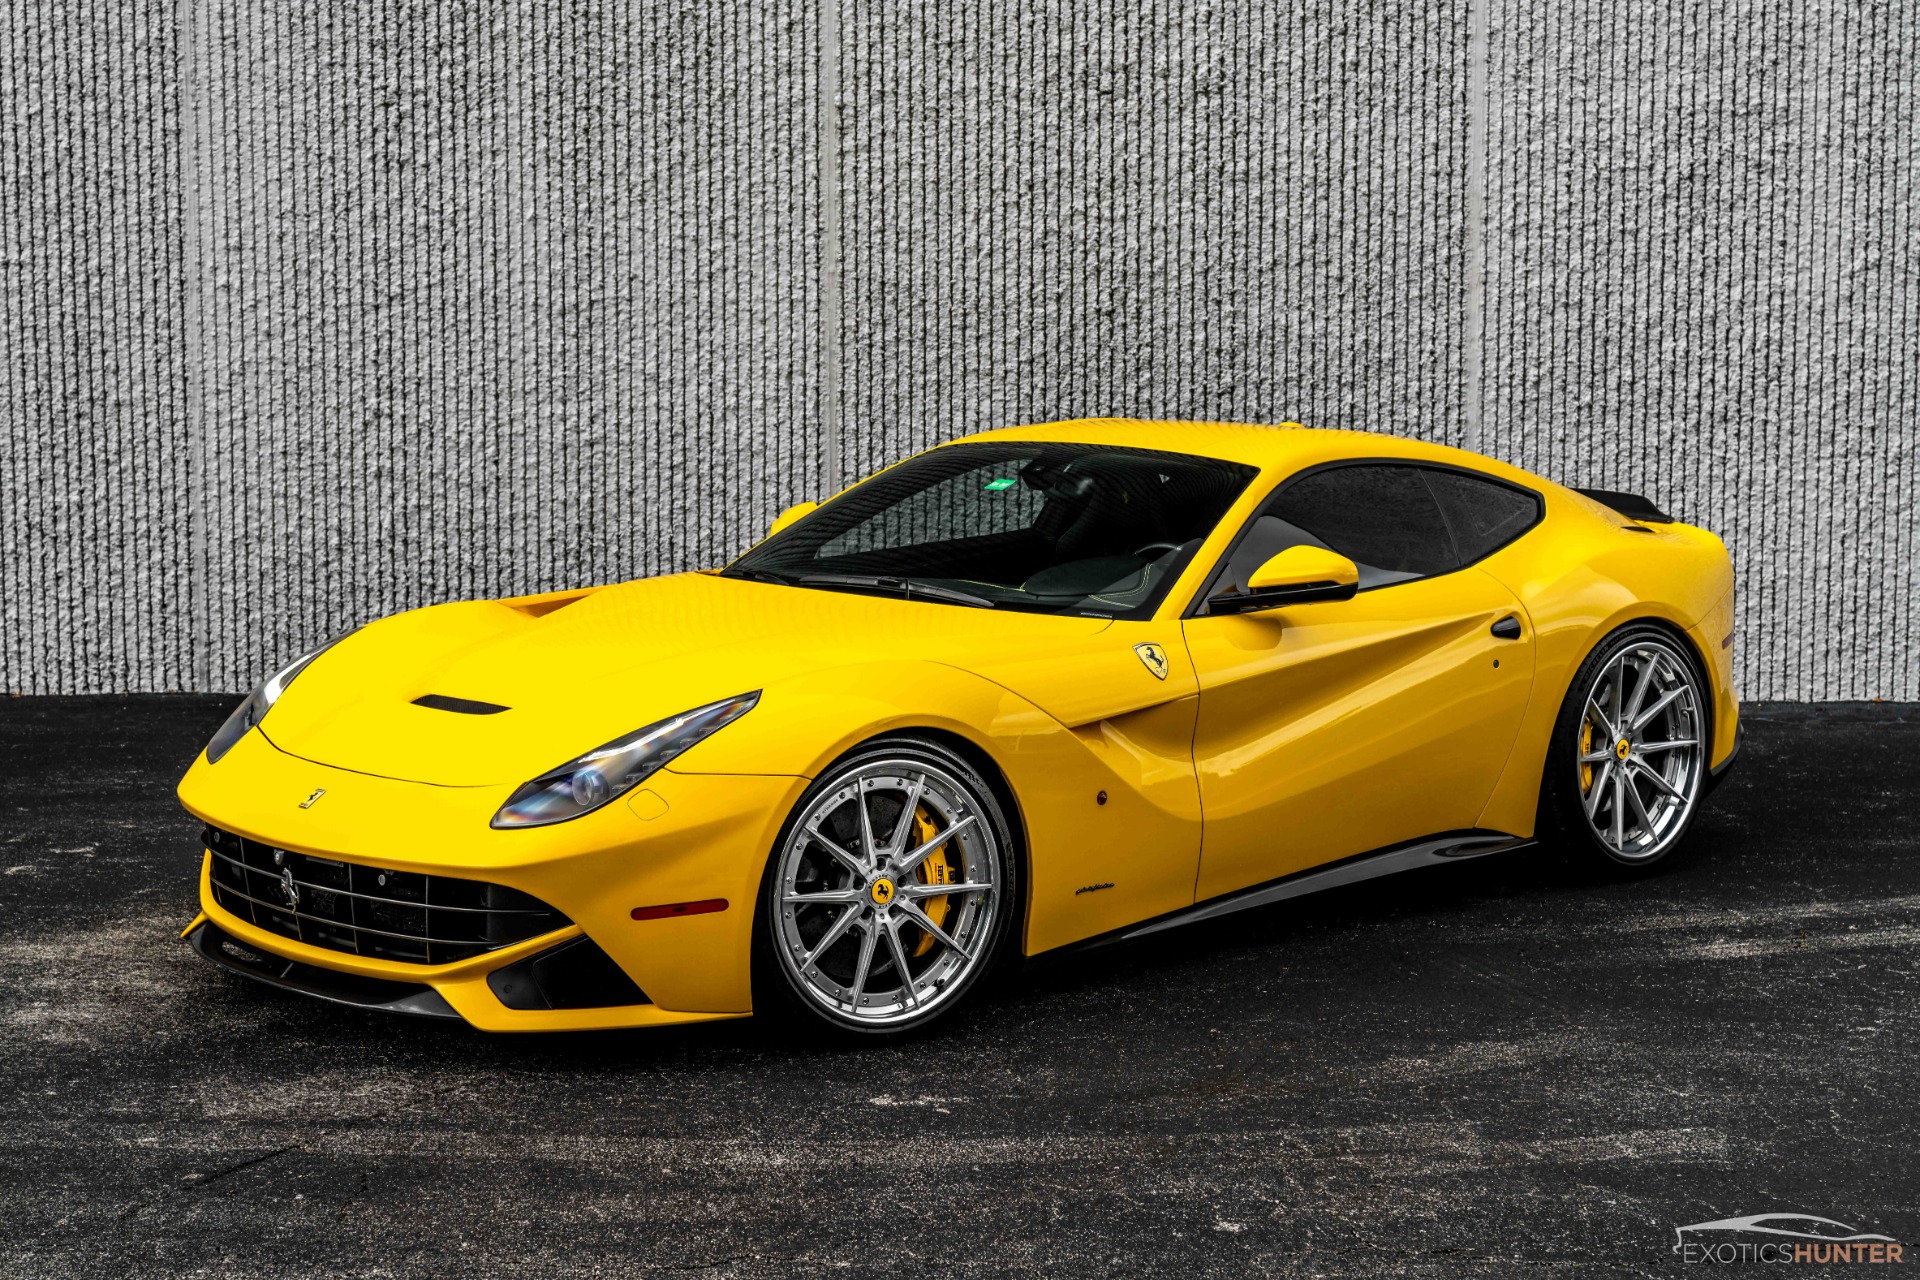 2014 Ferrari F12 Berlinetta for sale on BaT Auctions - sold for